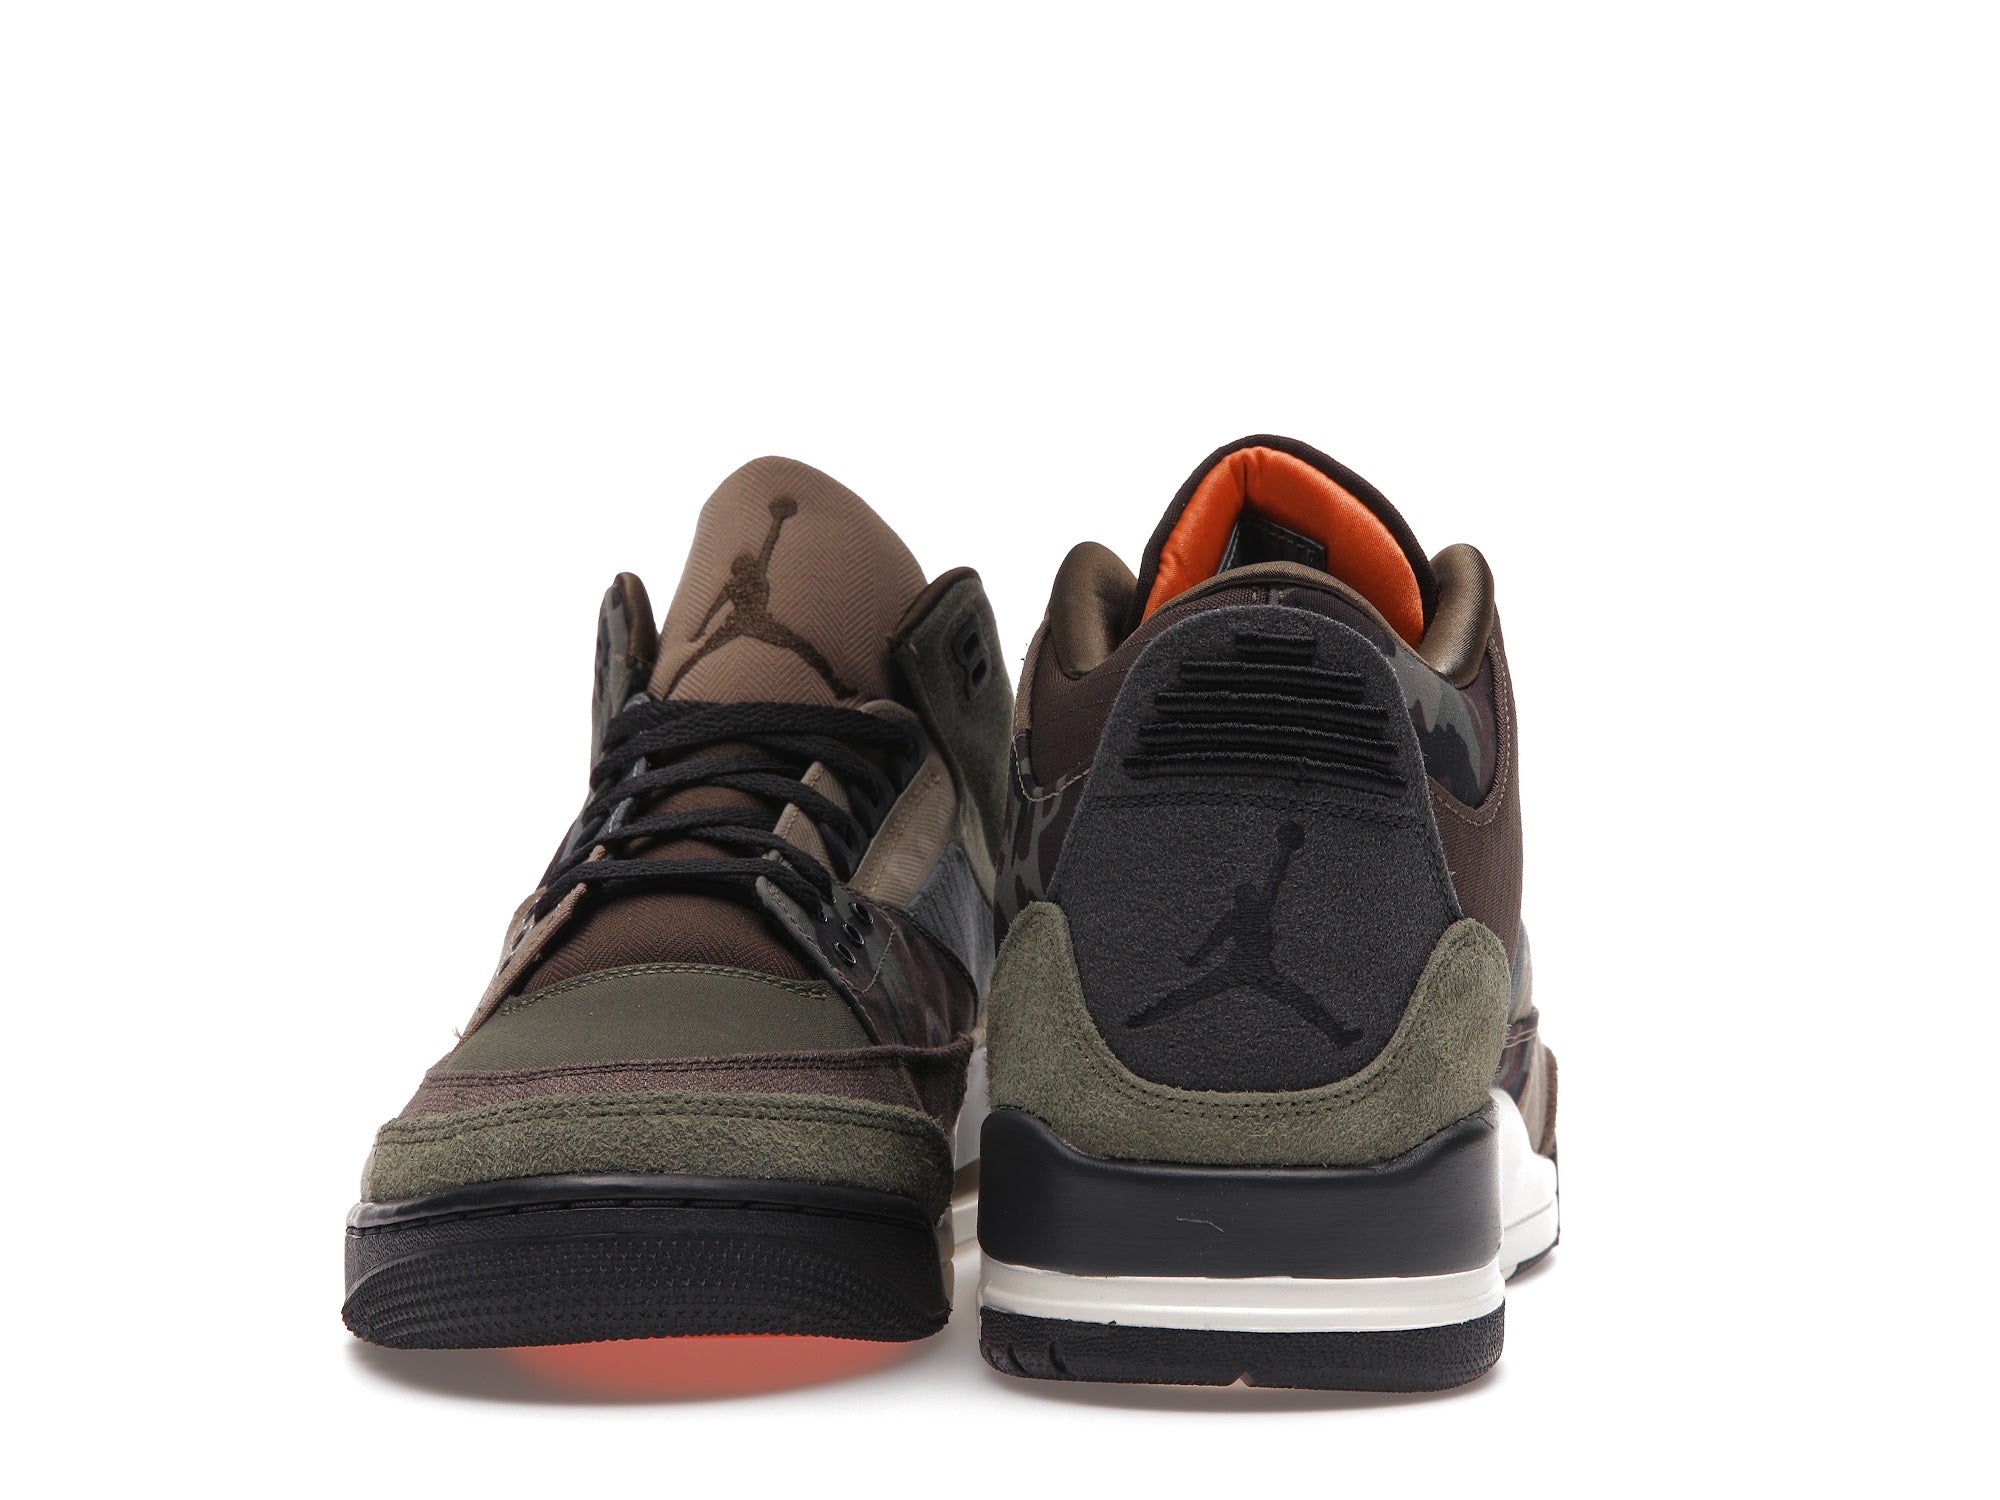 Nike Air Jordan 3 Retro SE Patchwork Camo DO1830-200 Men's Size 8.5